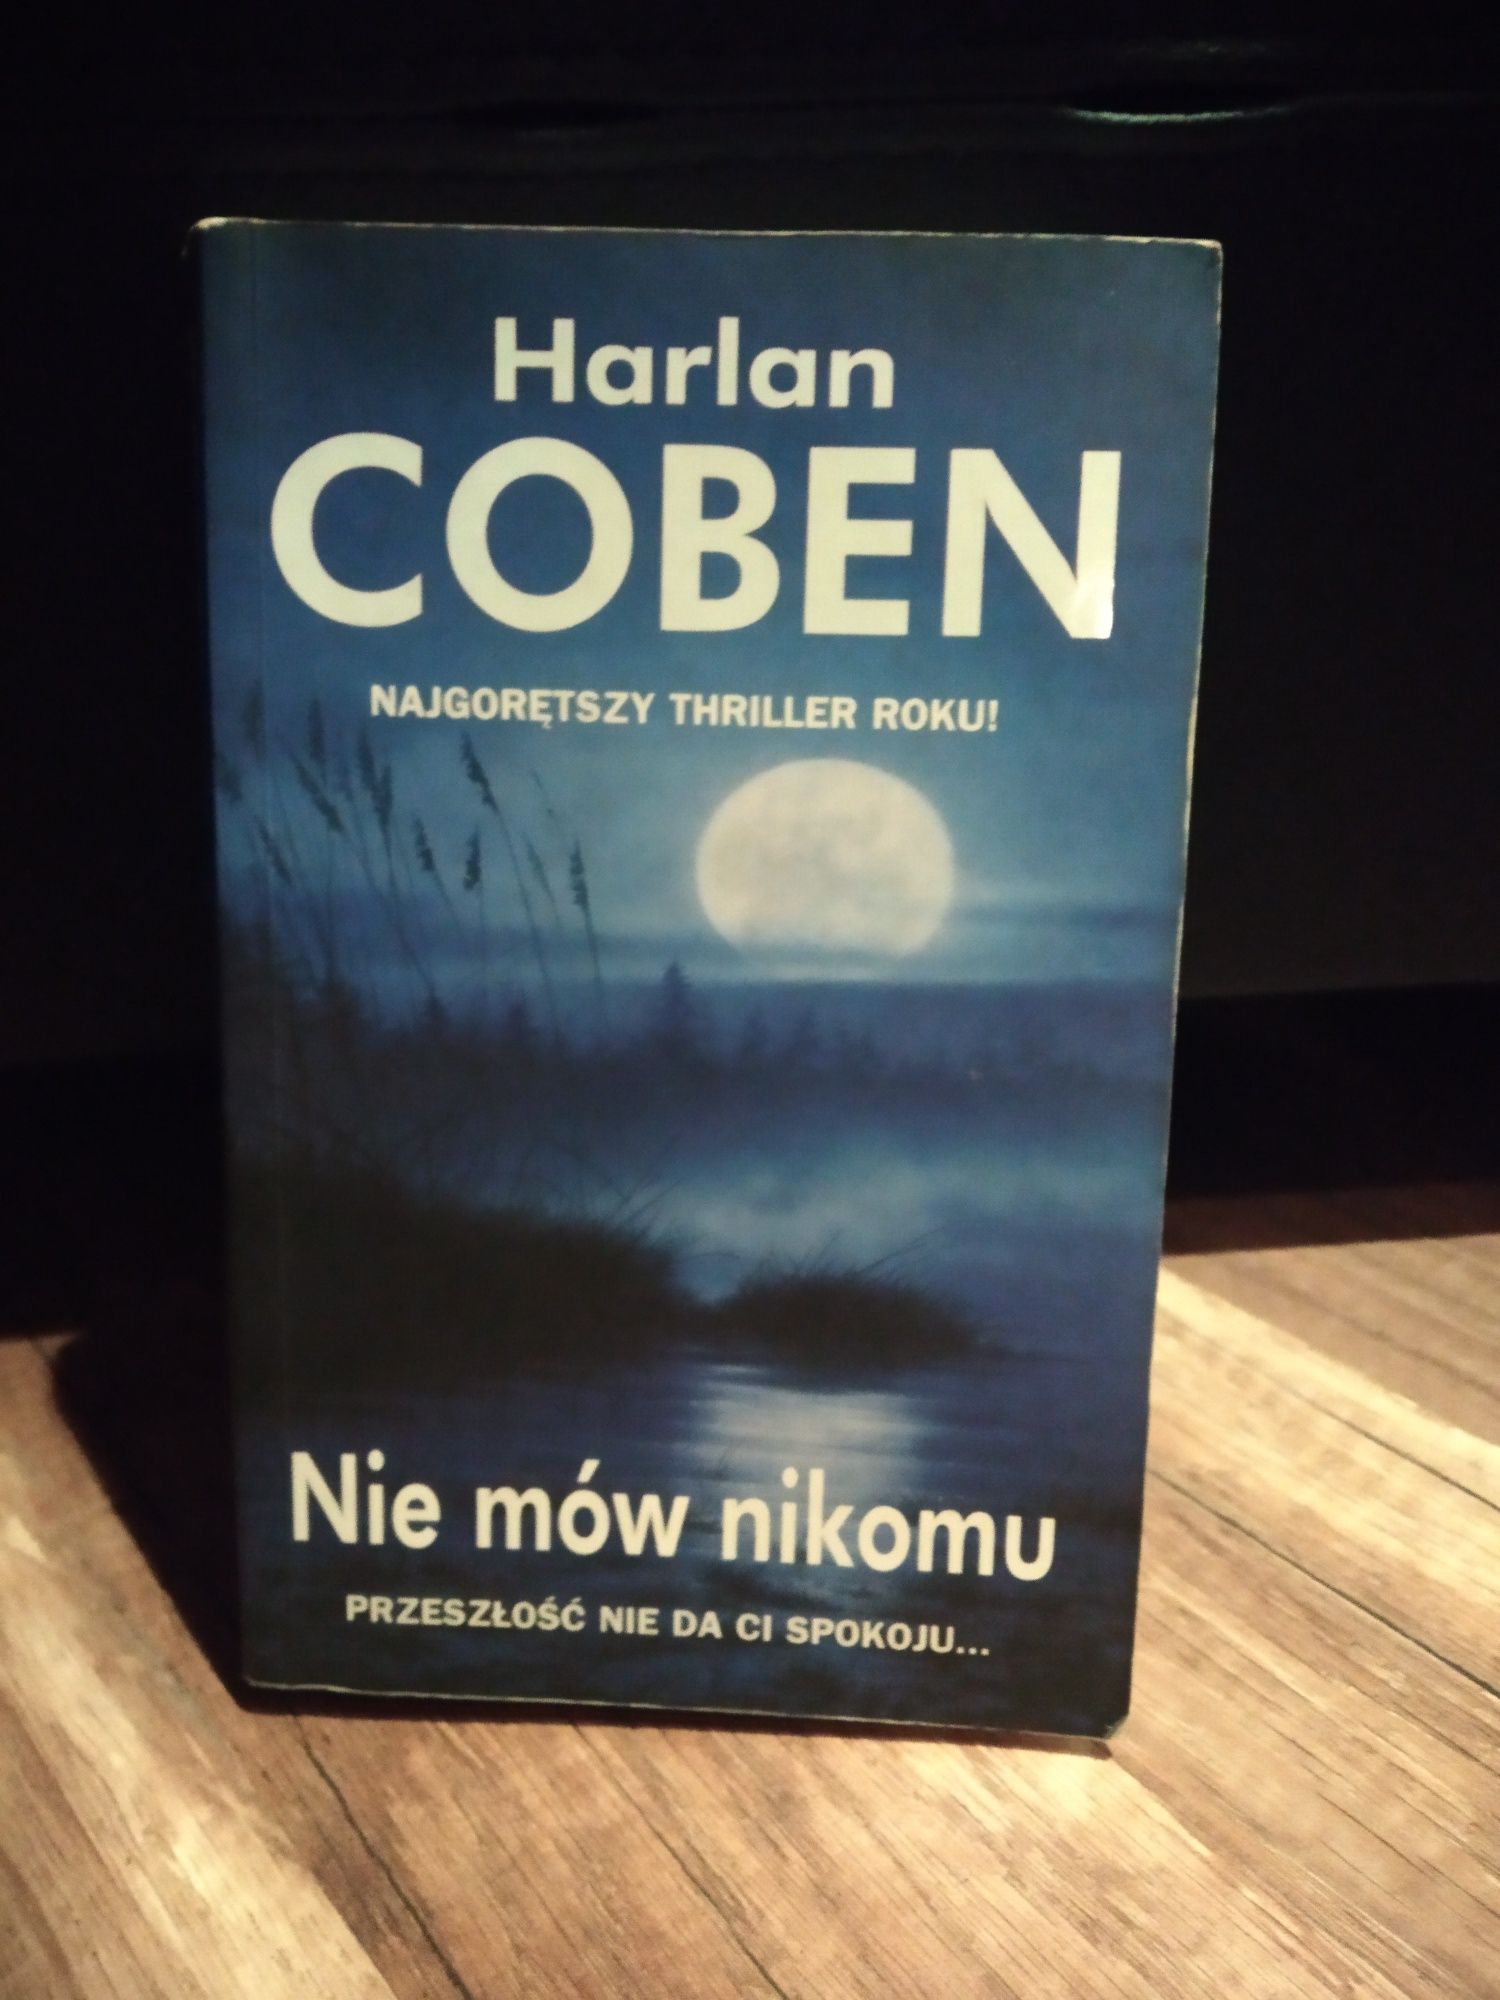 Książka "Nie mów nikomu" Harlan Coben, thriller